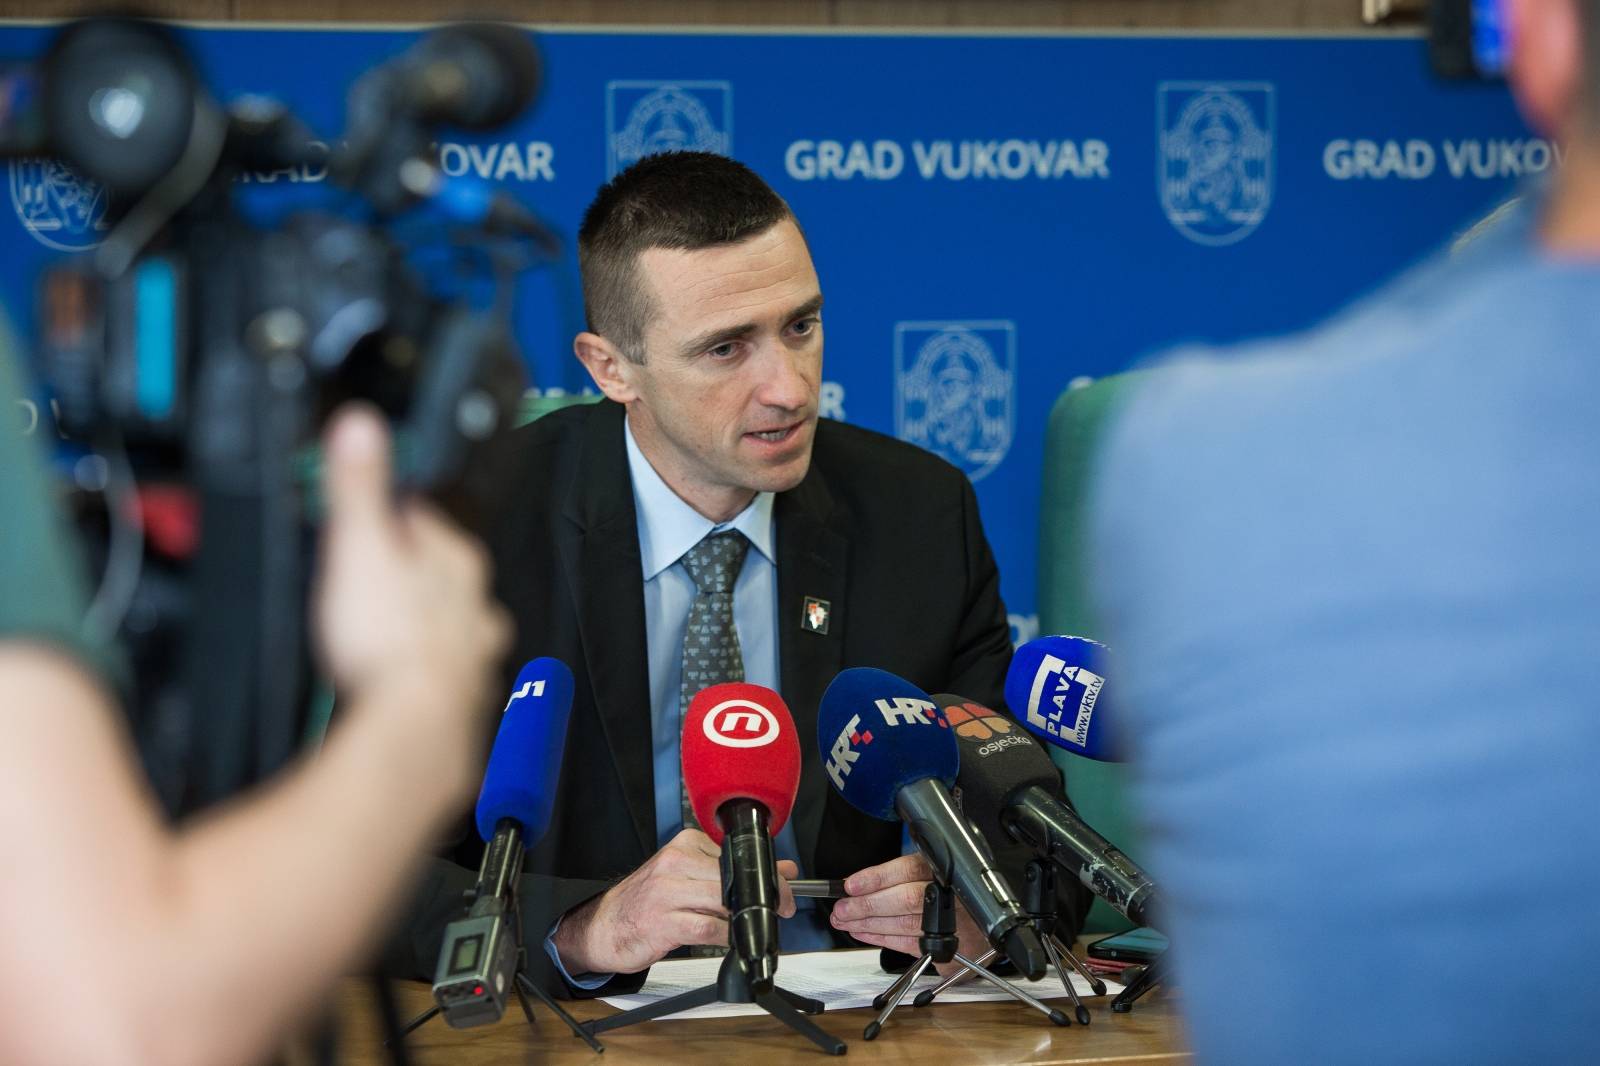 Vukovarski gradonaÄelnik Ivan Penava na konferenciji za novinare govorio je o odluci Ustavnog suda